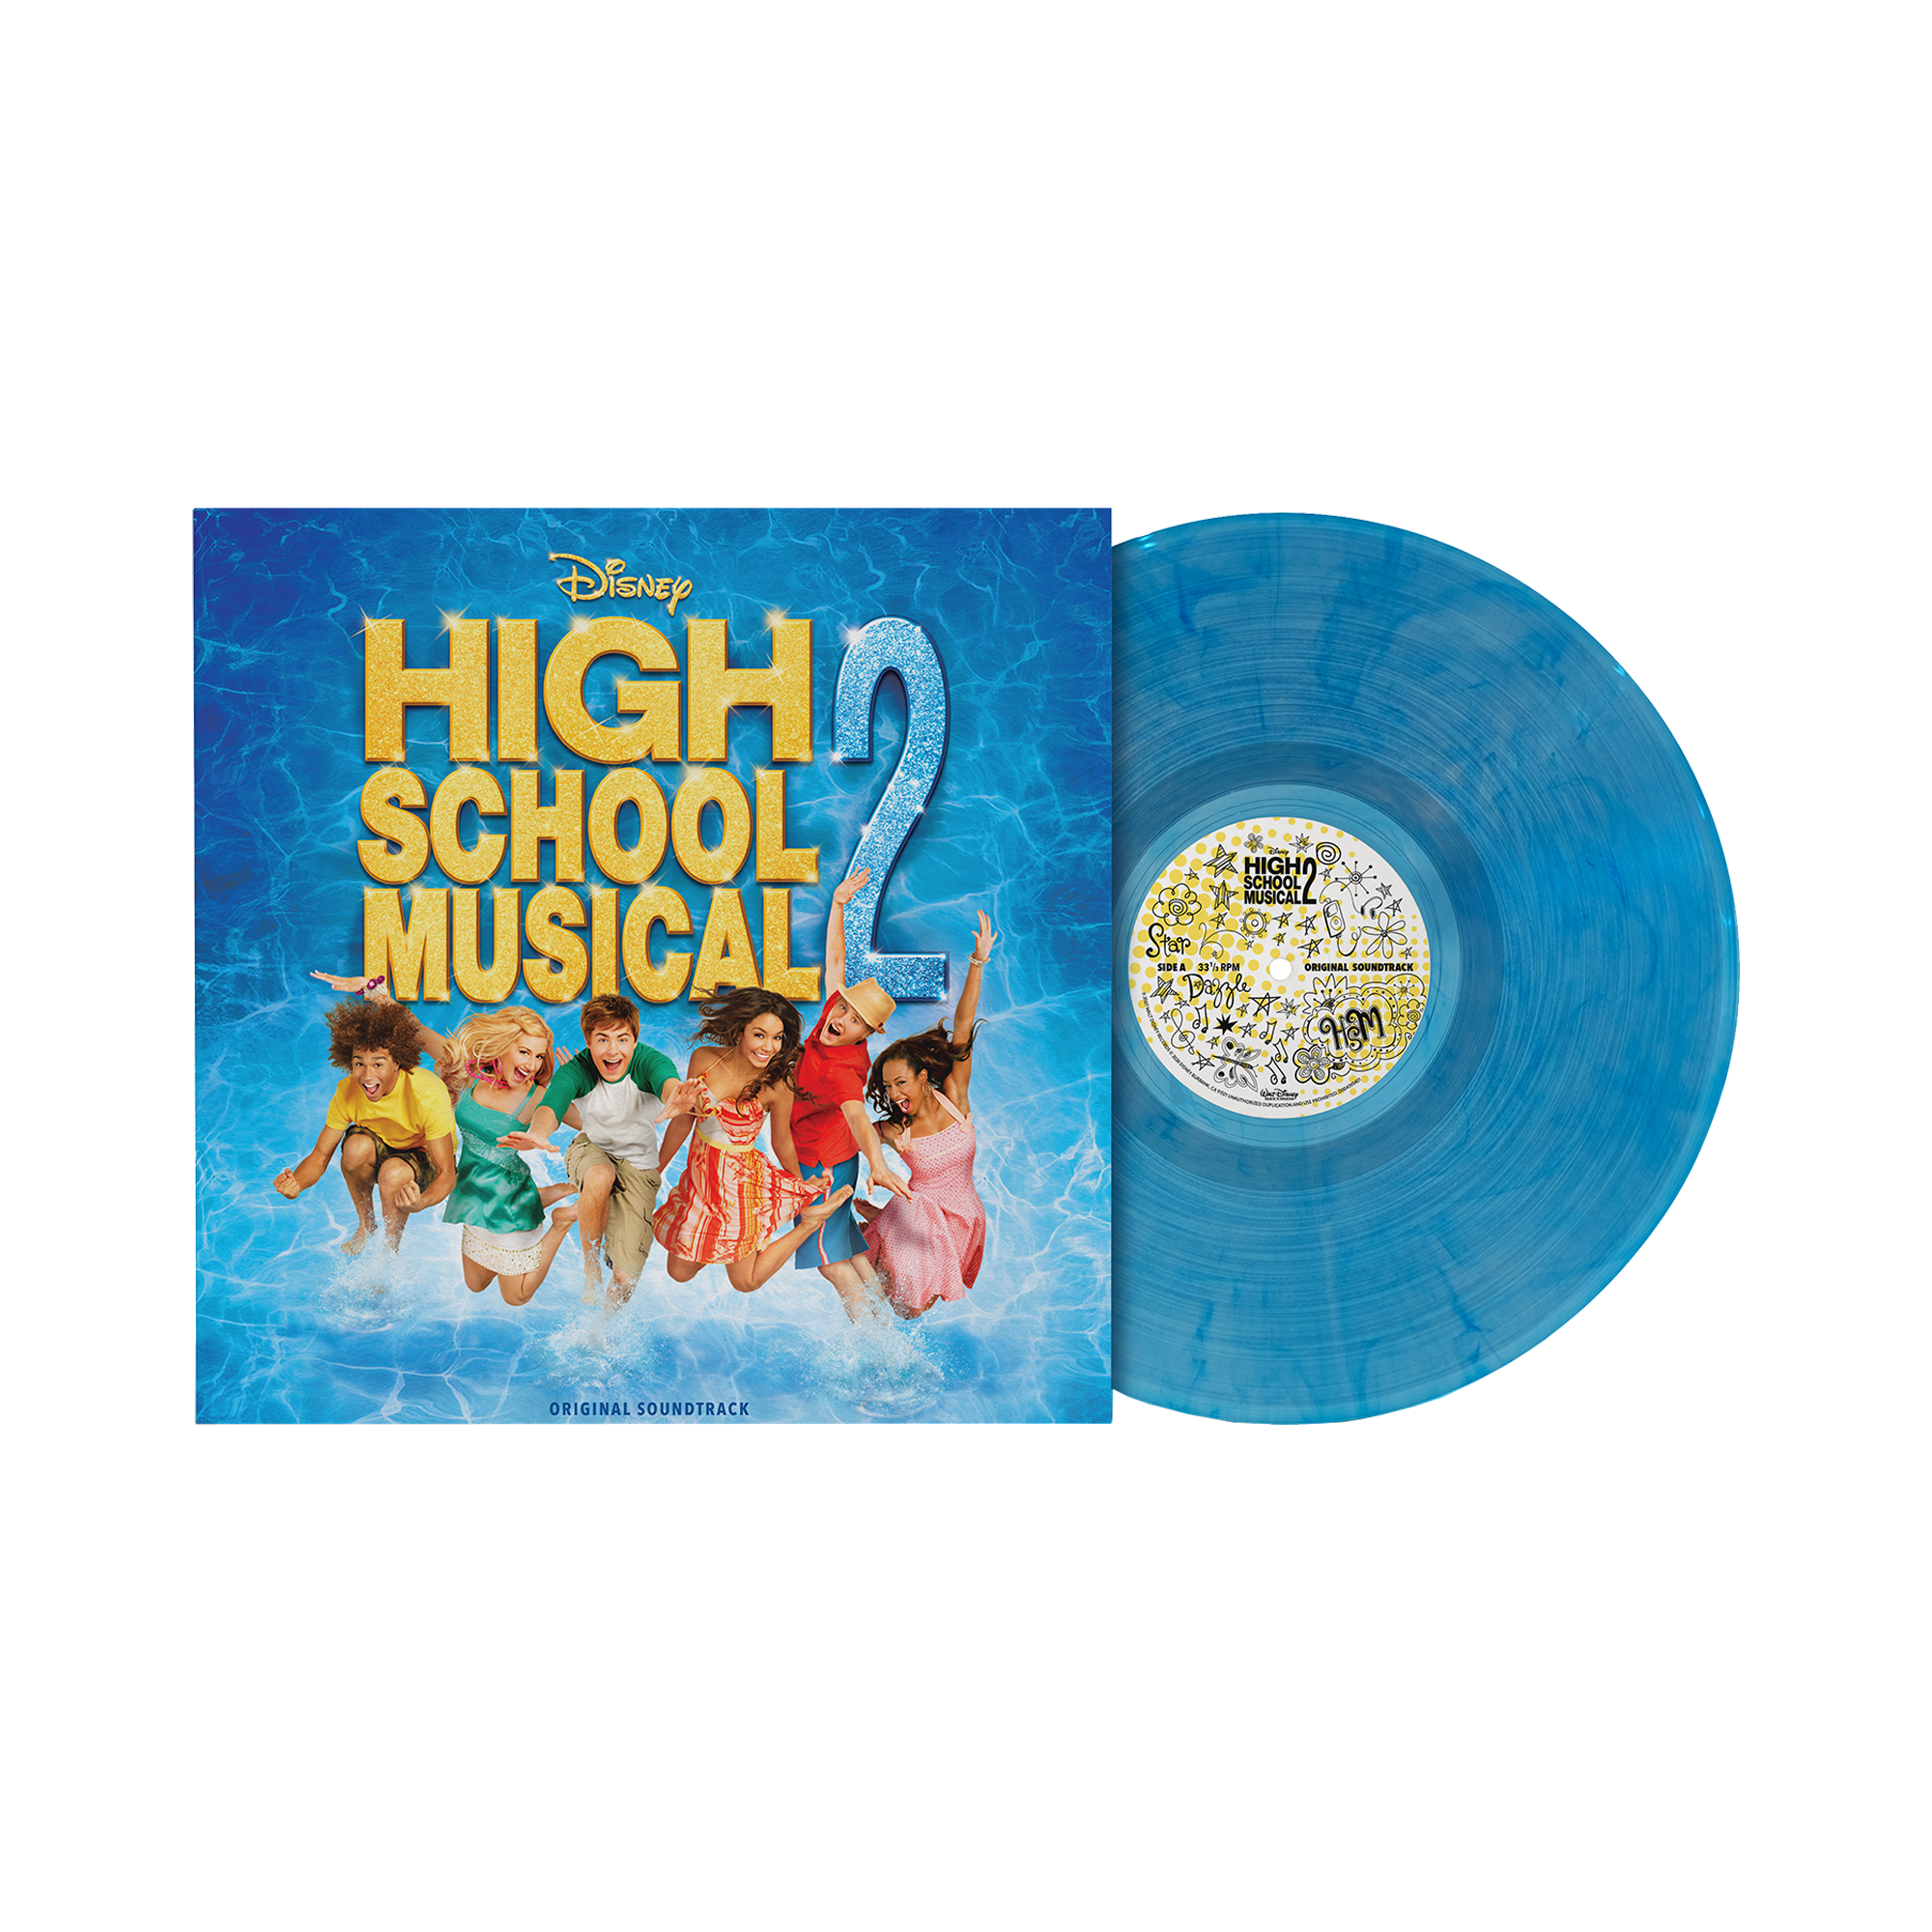 High School Musical Cast, Disney - High School Musical 2: Sky Blue Vinyl LP